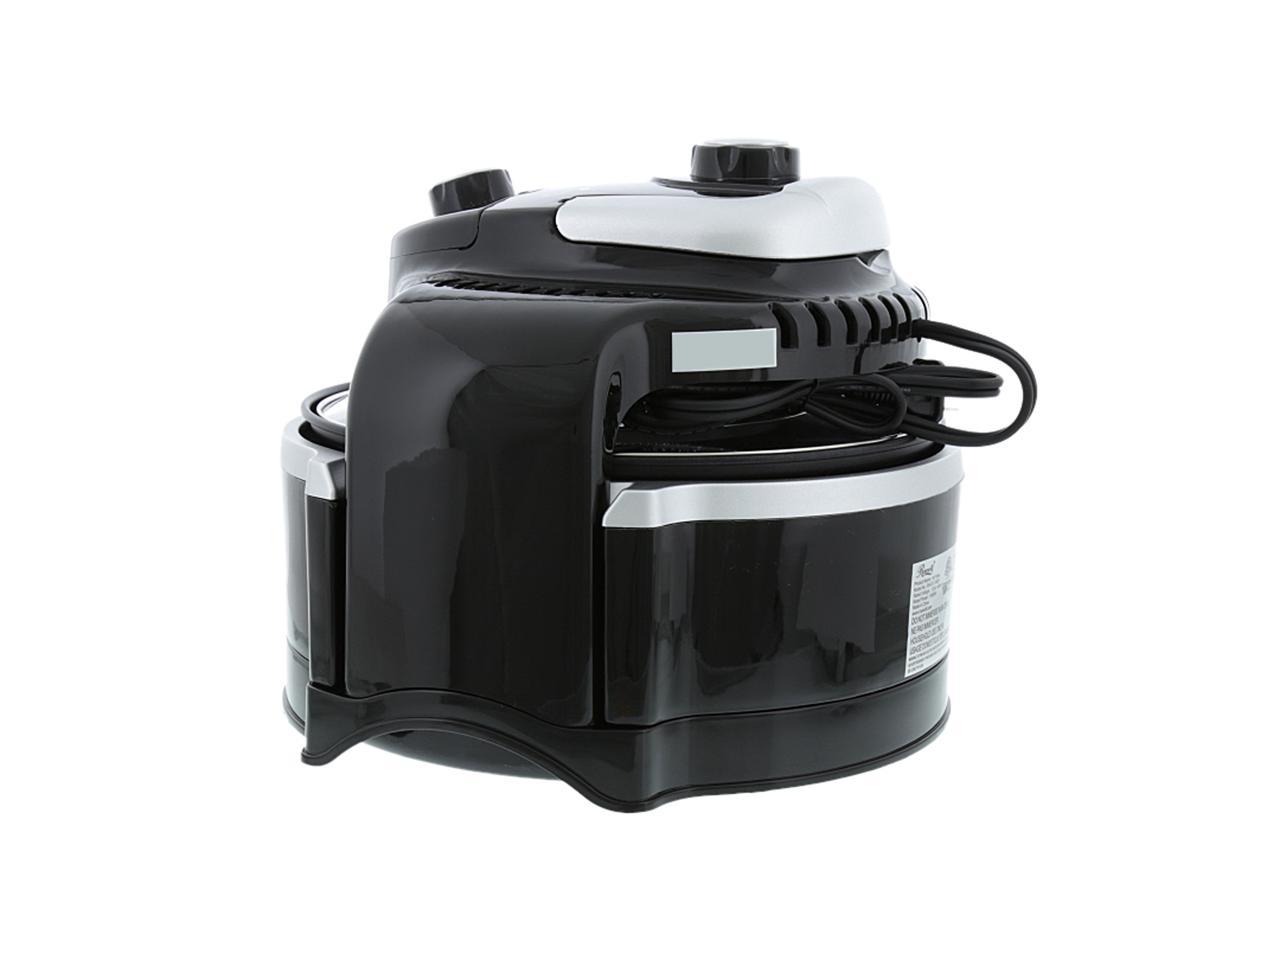 Rosewill Air Fryer 7.4-Quart Oil-Less Low Fat Multicooker 1000w 7 Liter